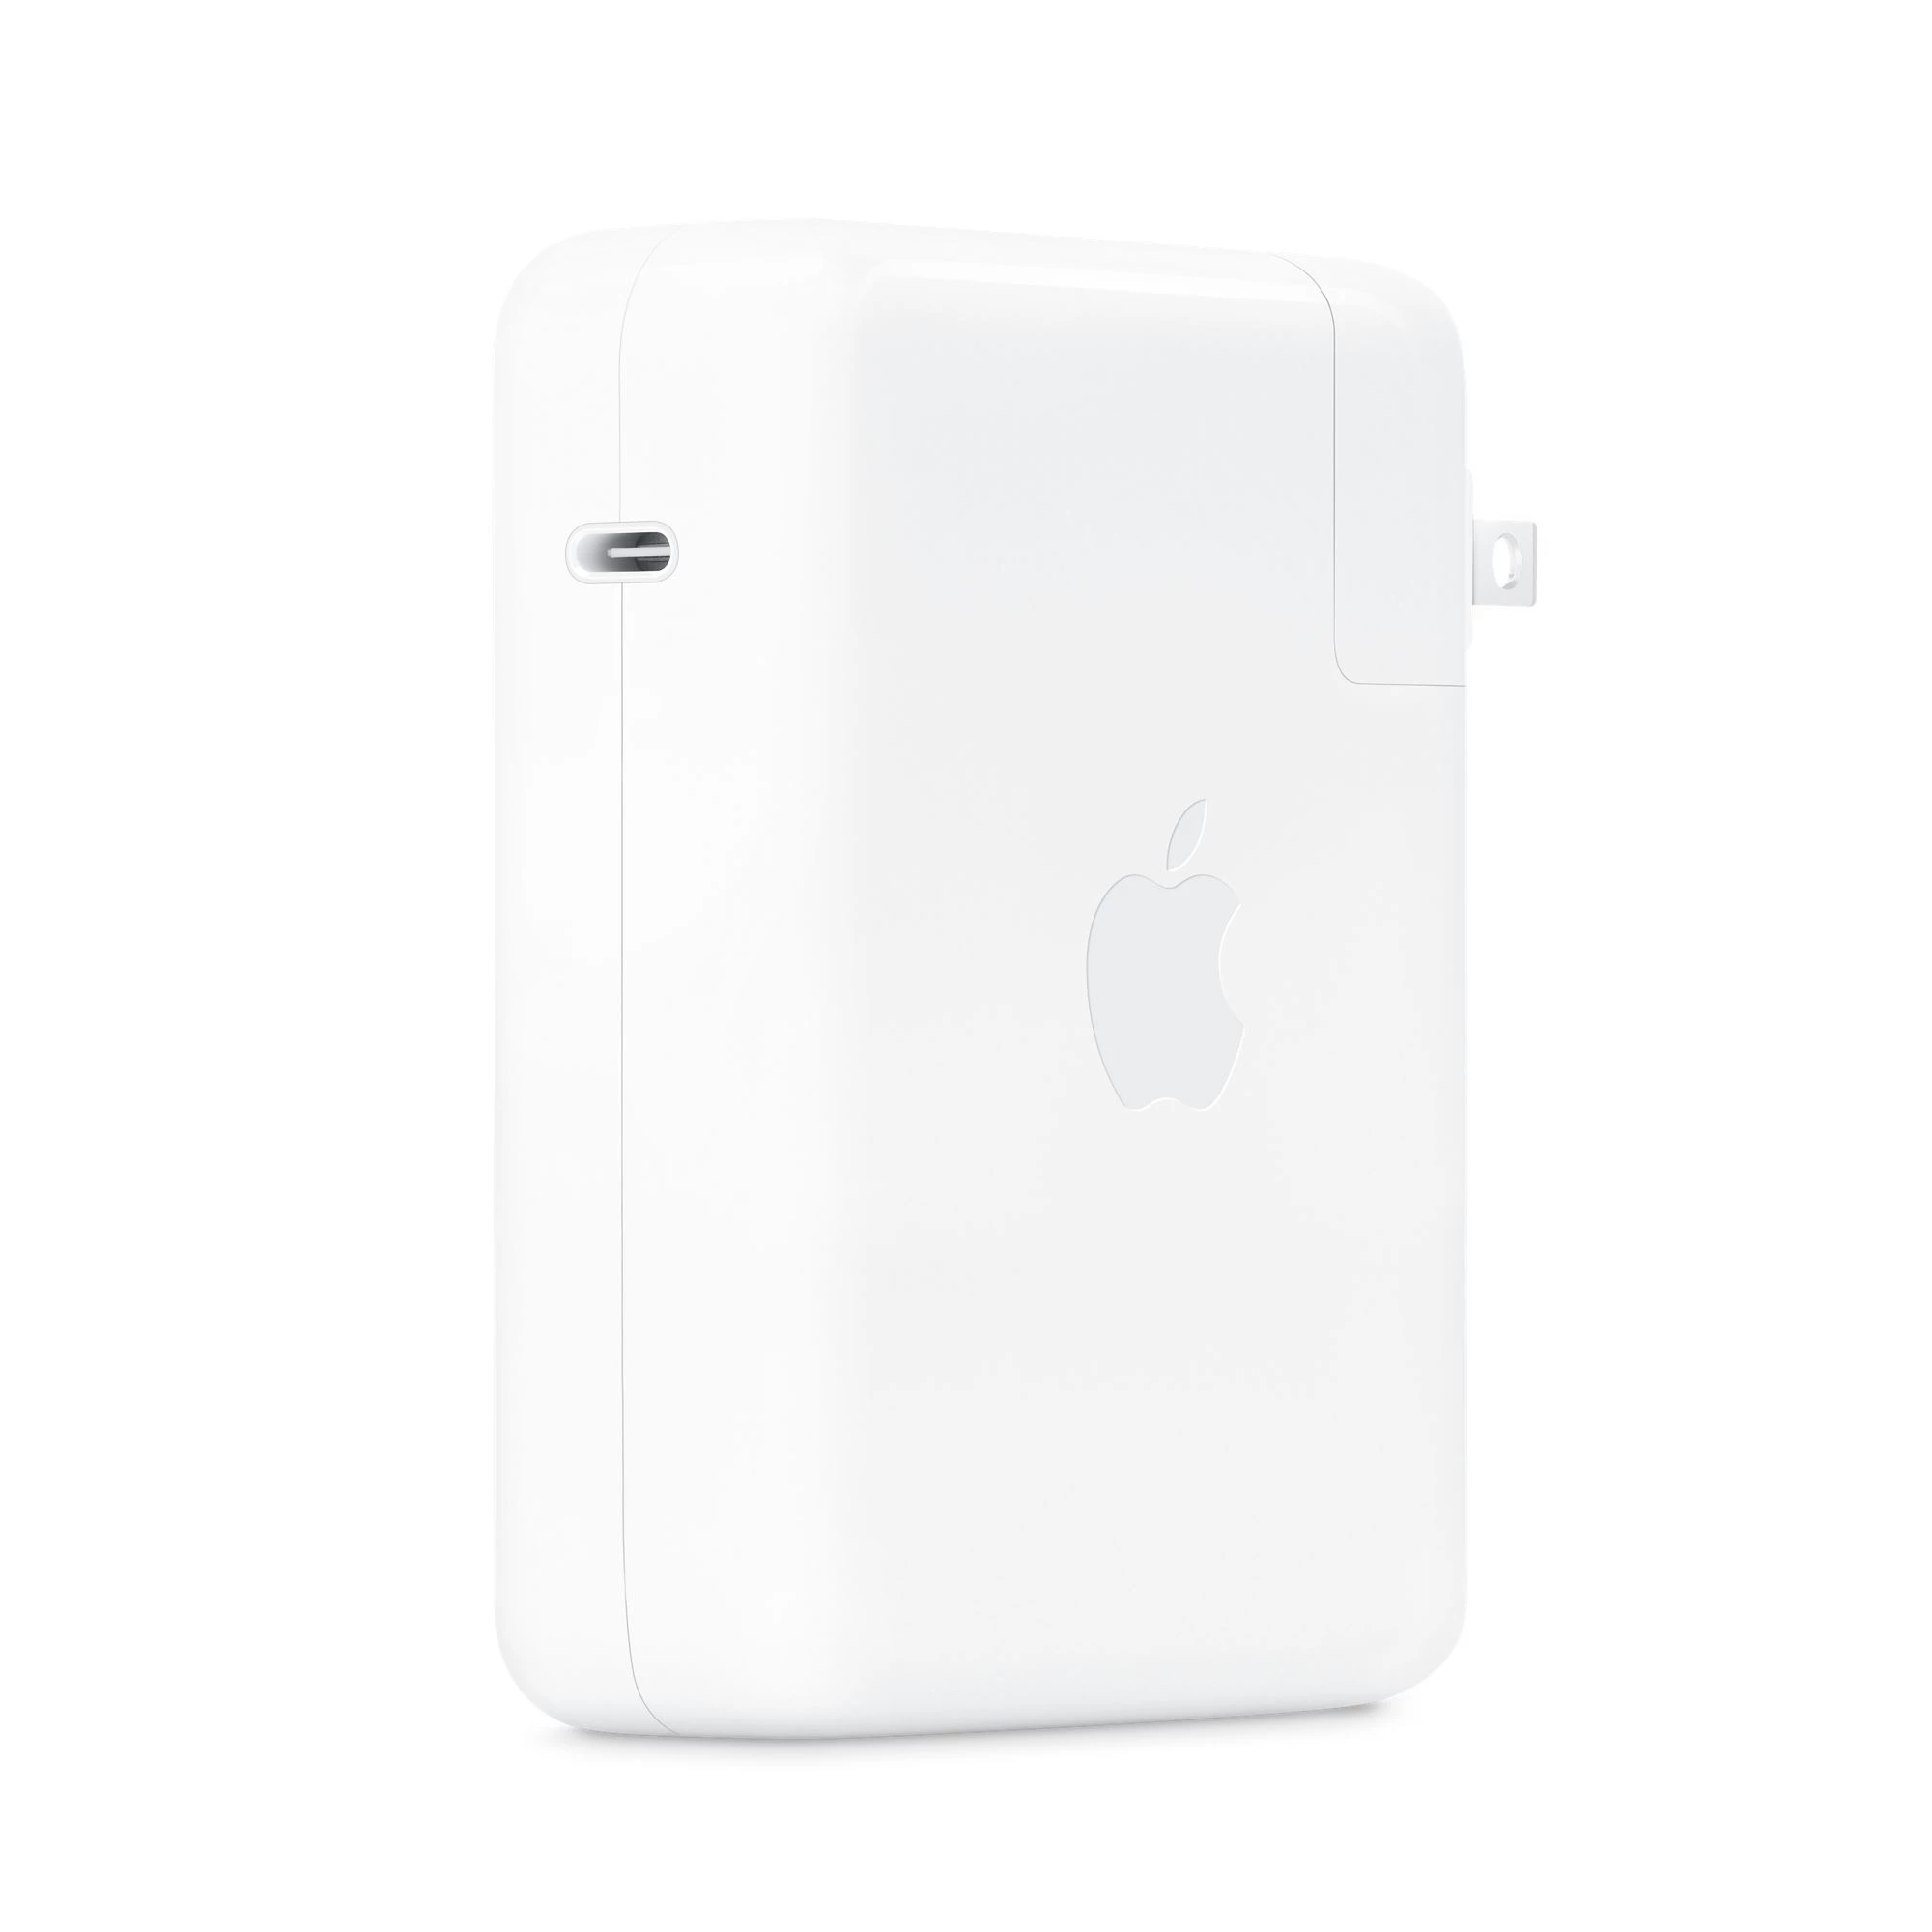 Apple 140W USB-C Power Adapter (MLYU3) USA